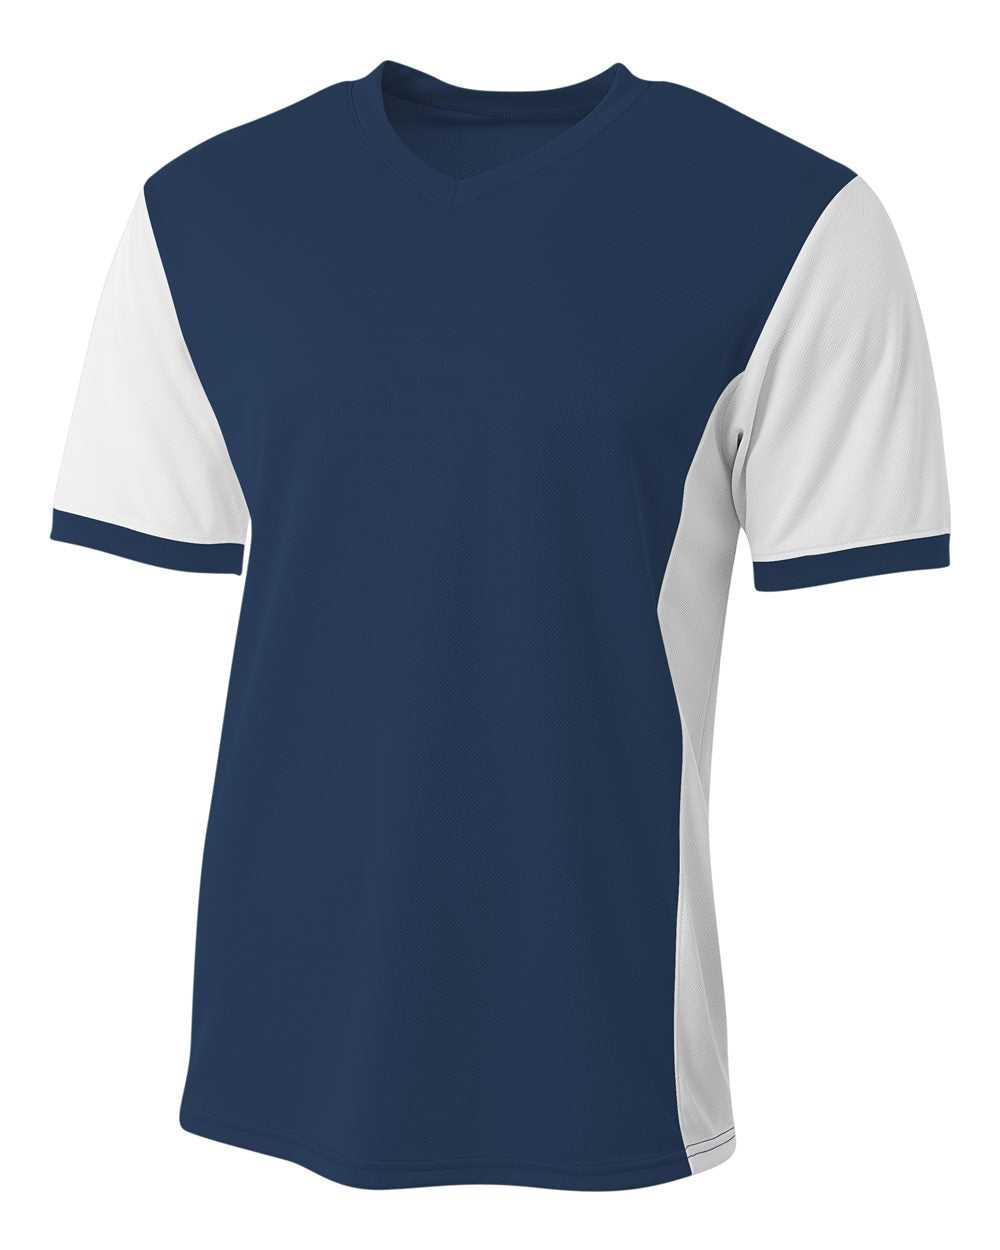 A4 NB3017 Premier Soccer Jersey - Navy White - HIT a Double